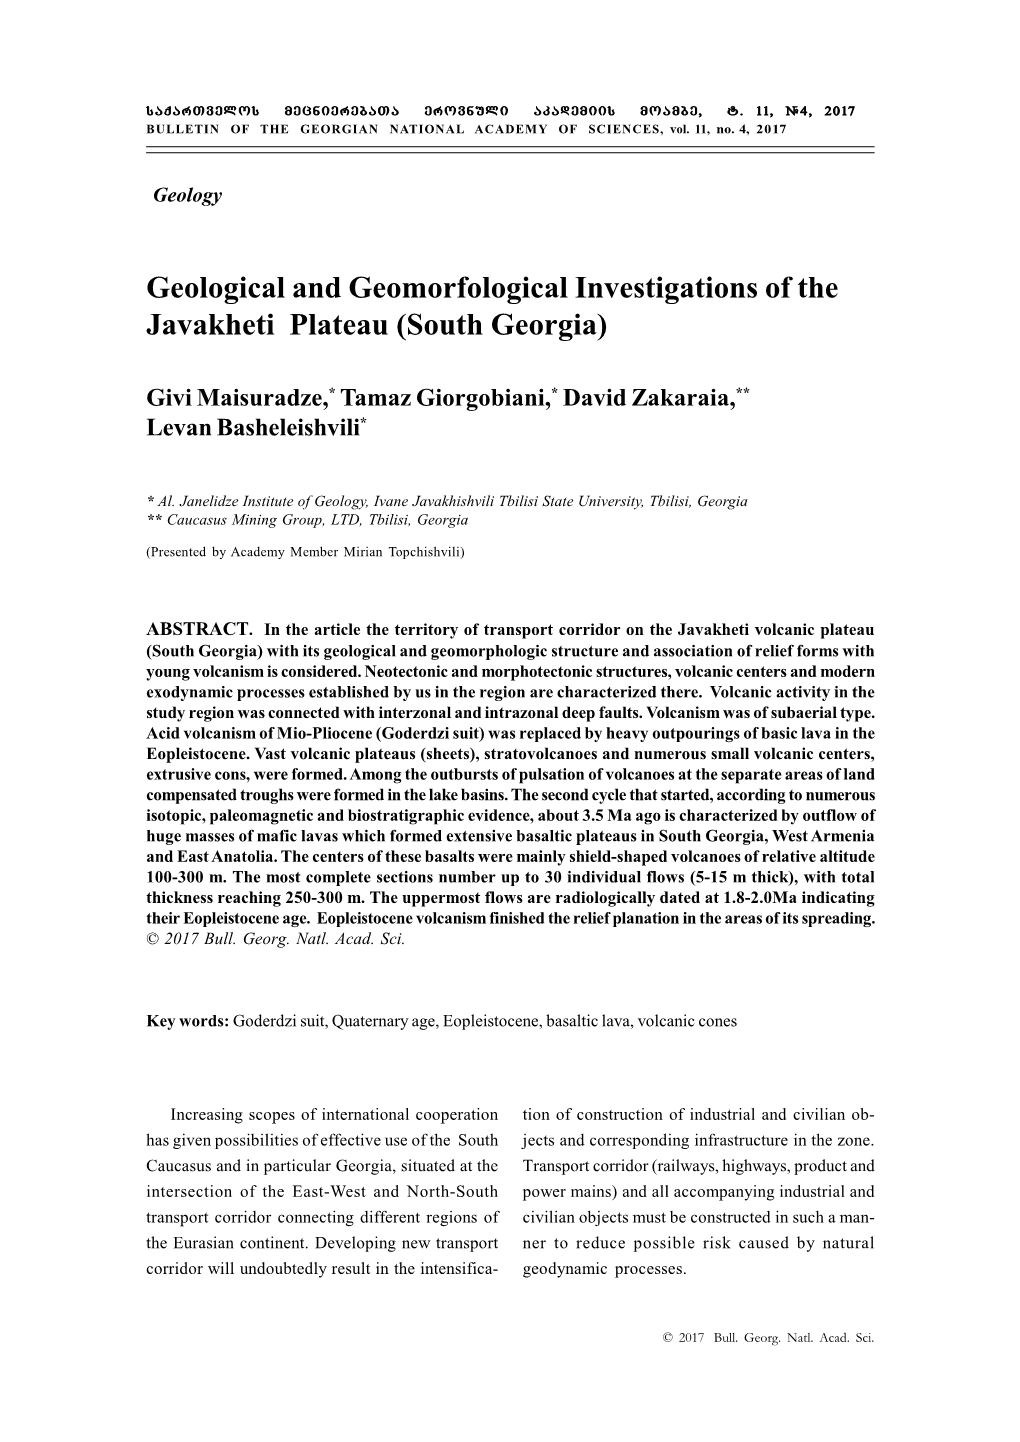 Geological and Geomorfological Investigations of the Javakheti Plateau (South Georgia)